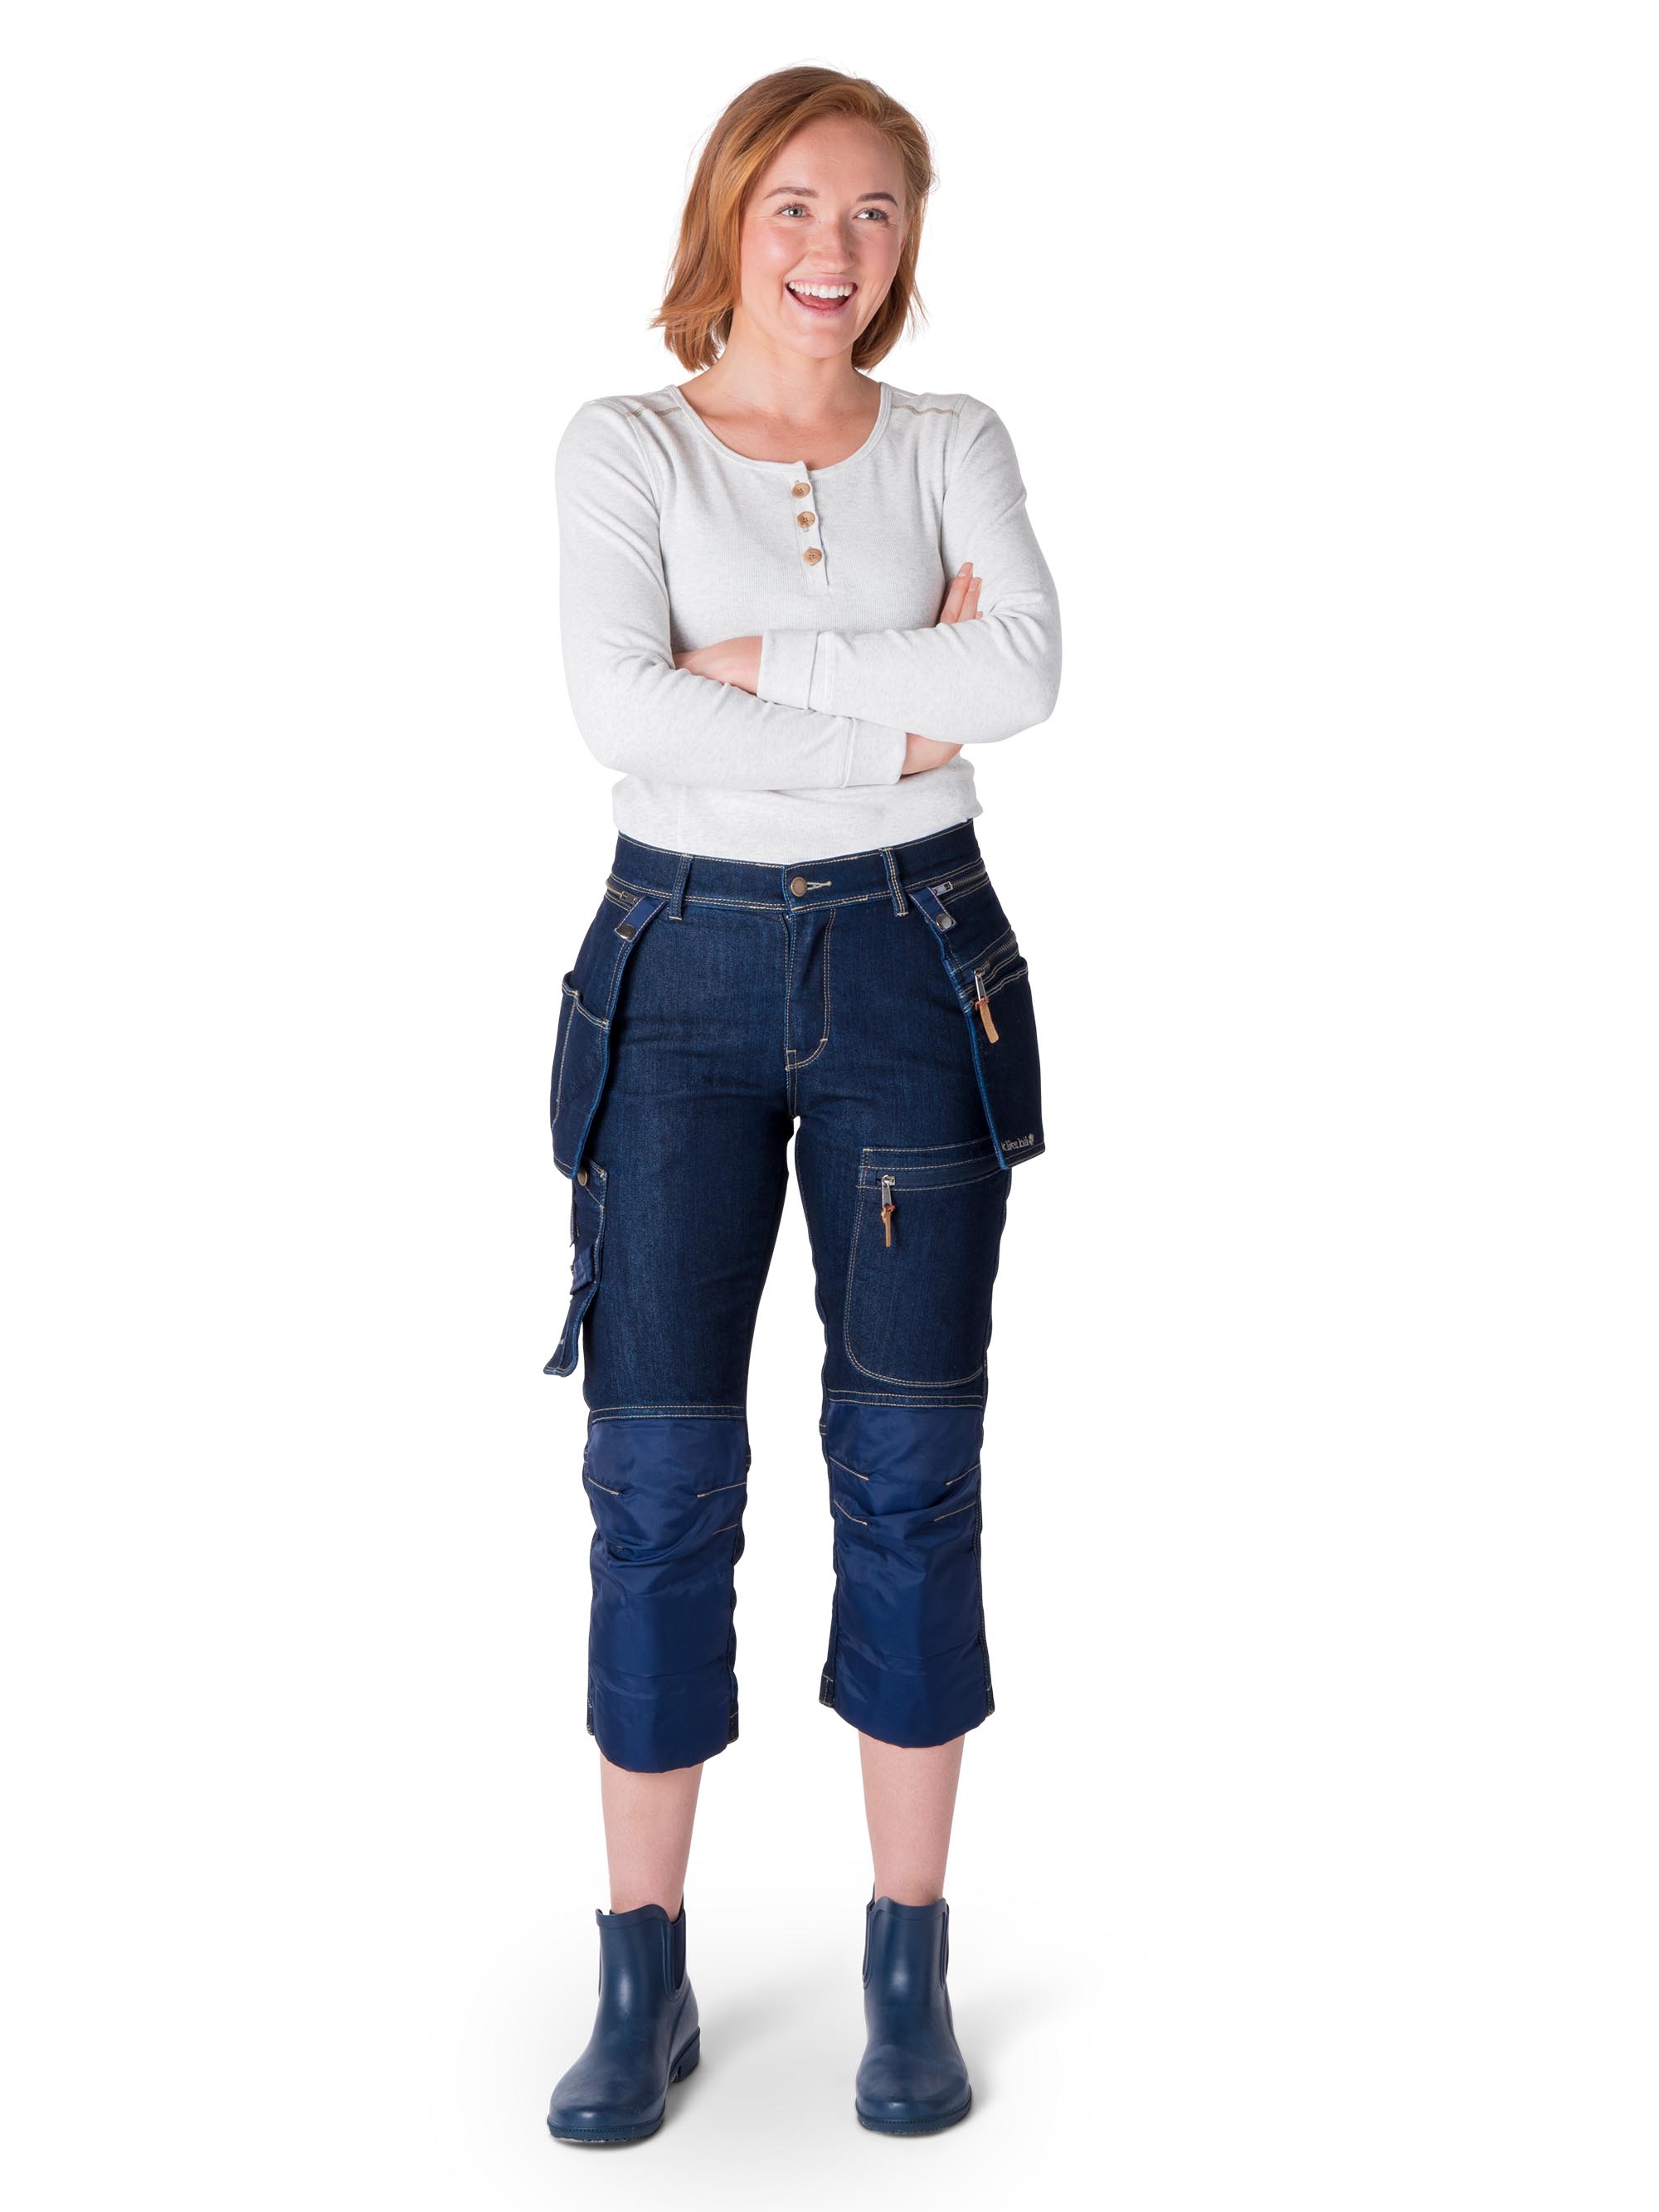 Dora worker capri pants - women's capri work trousers - Flora